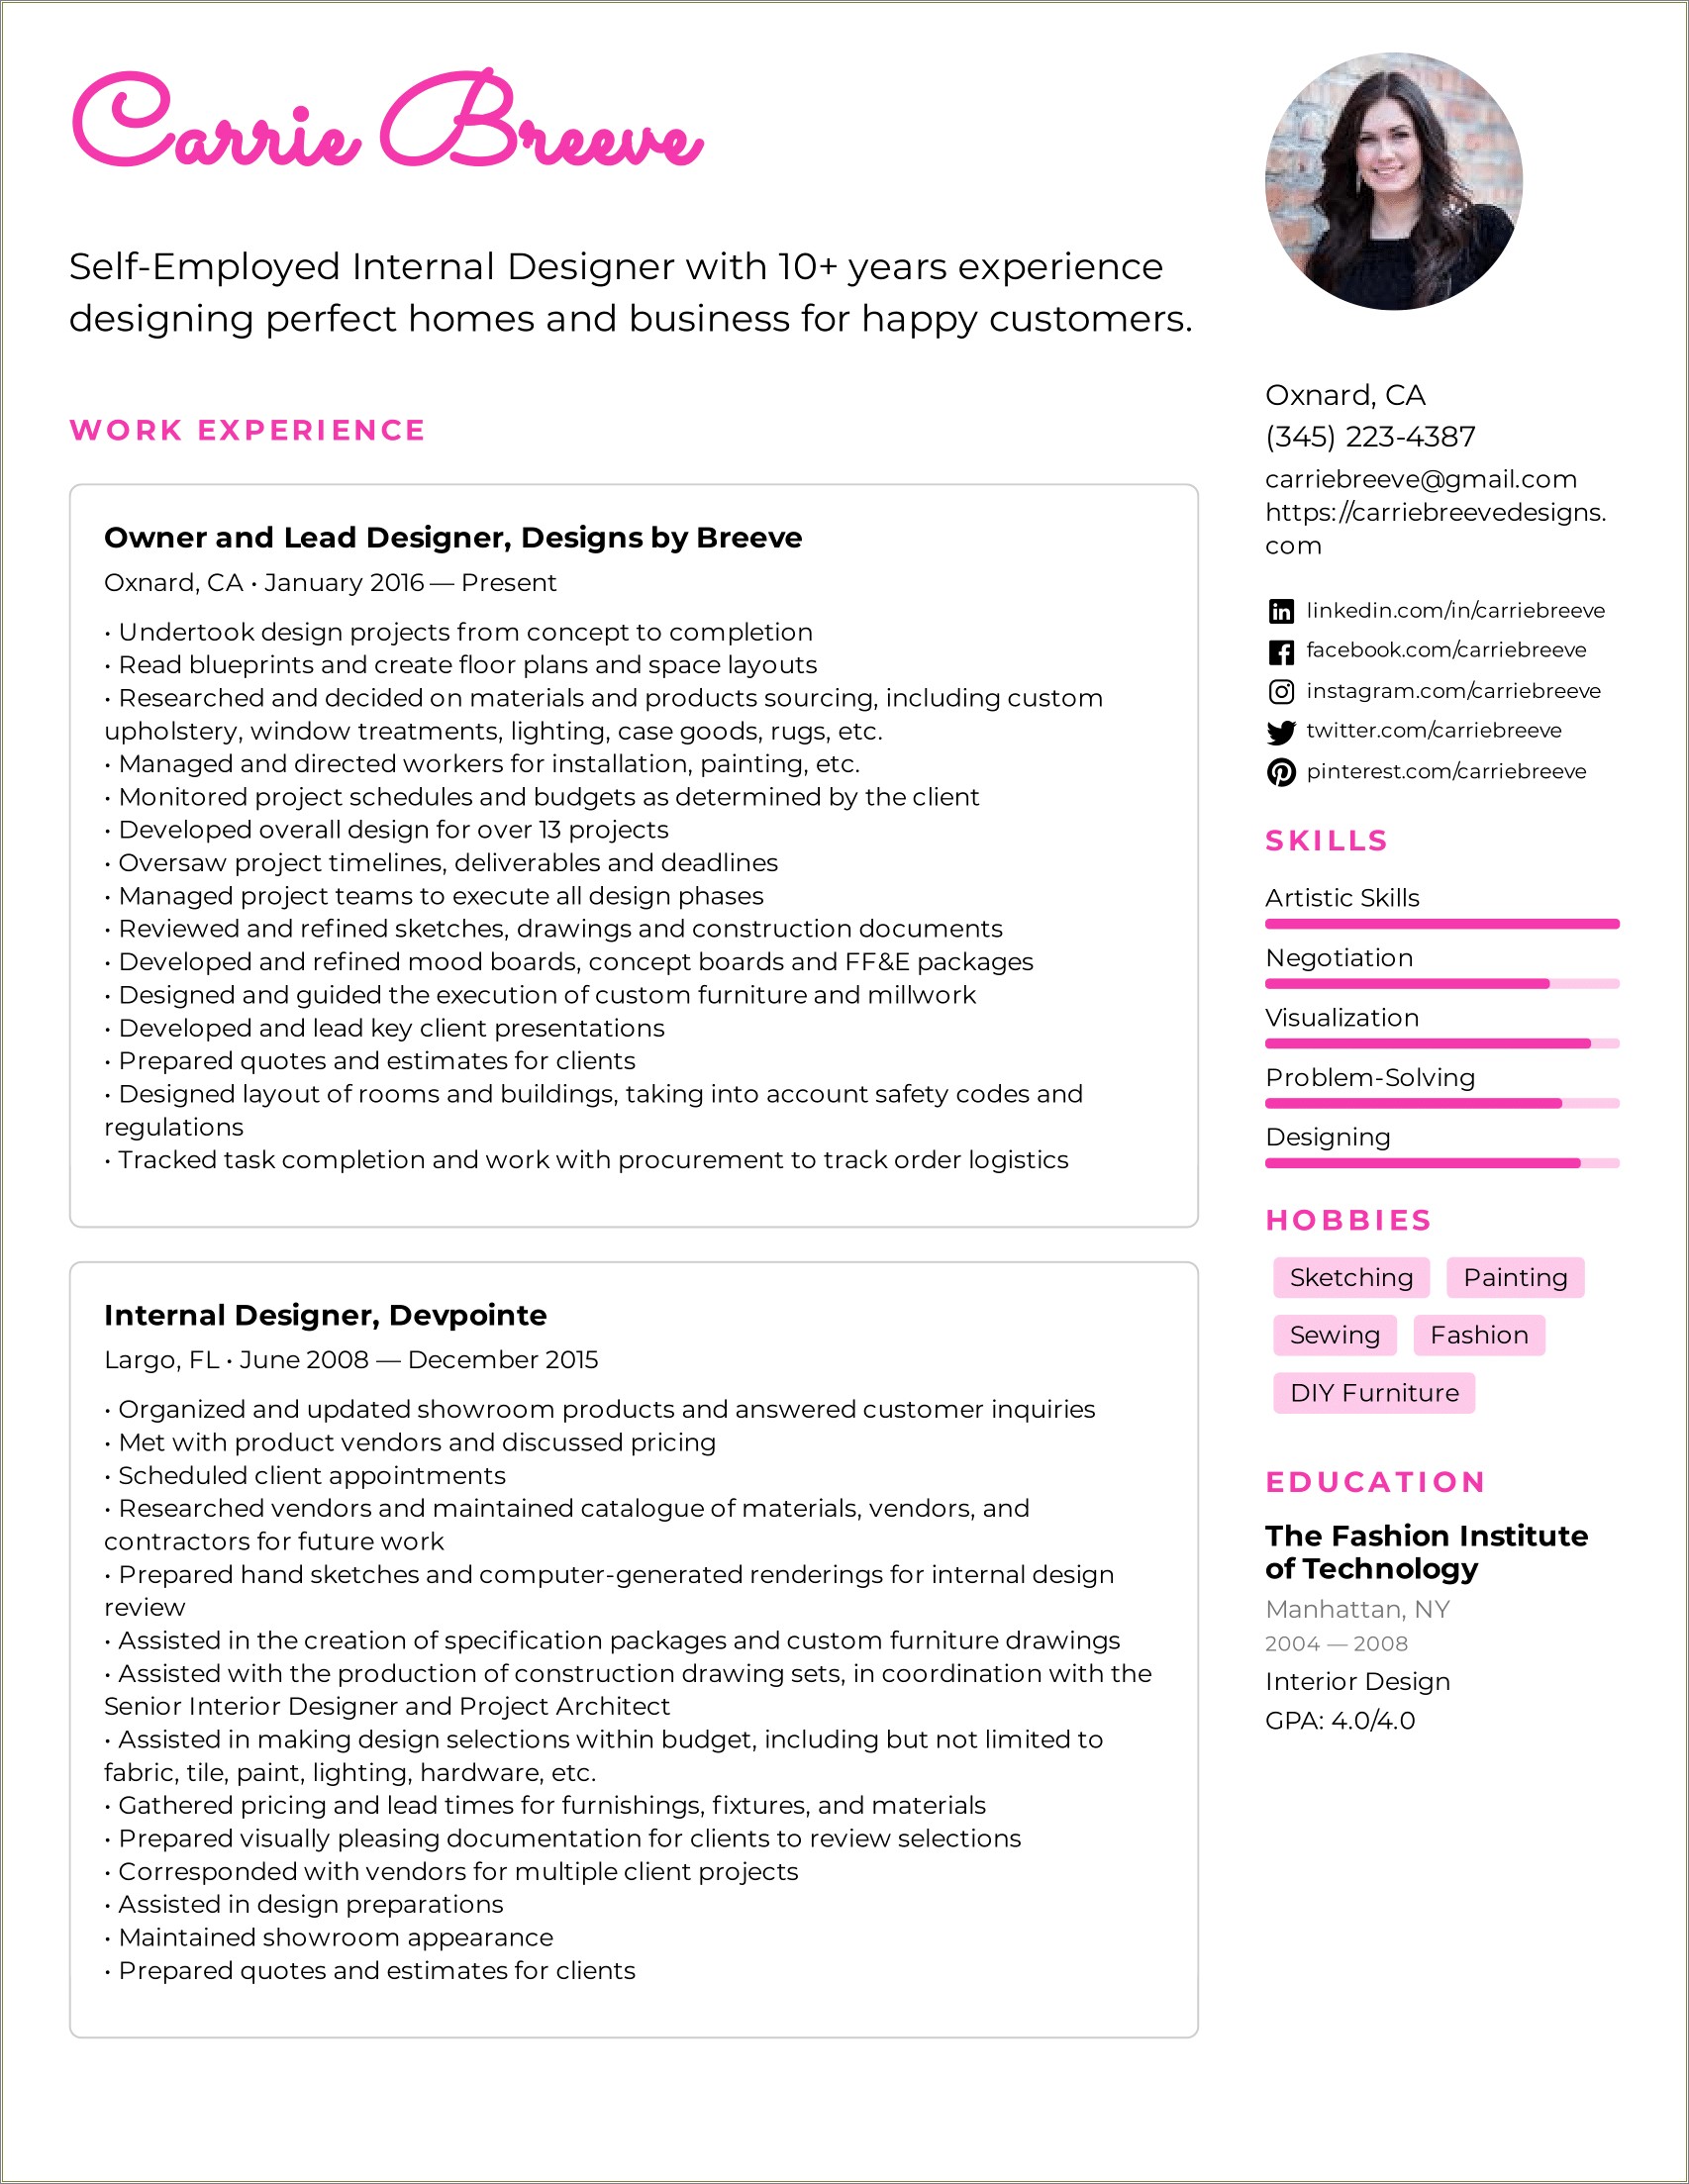 Resume Objective For Interior Design Jobs